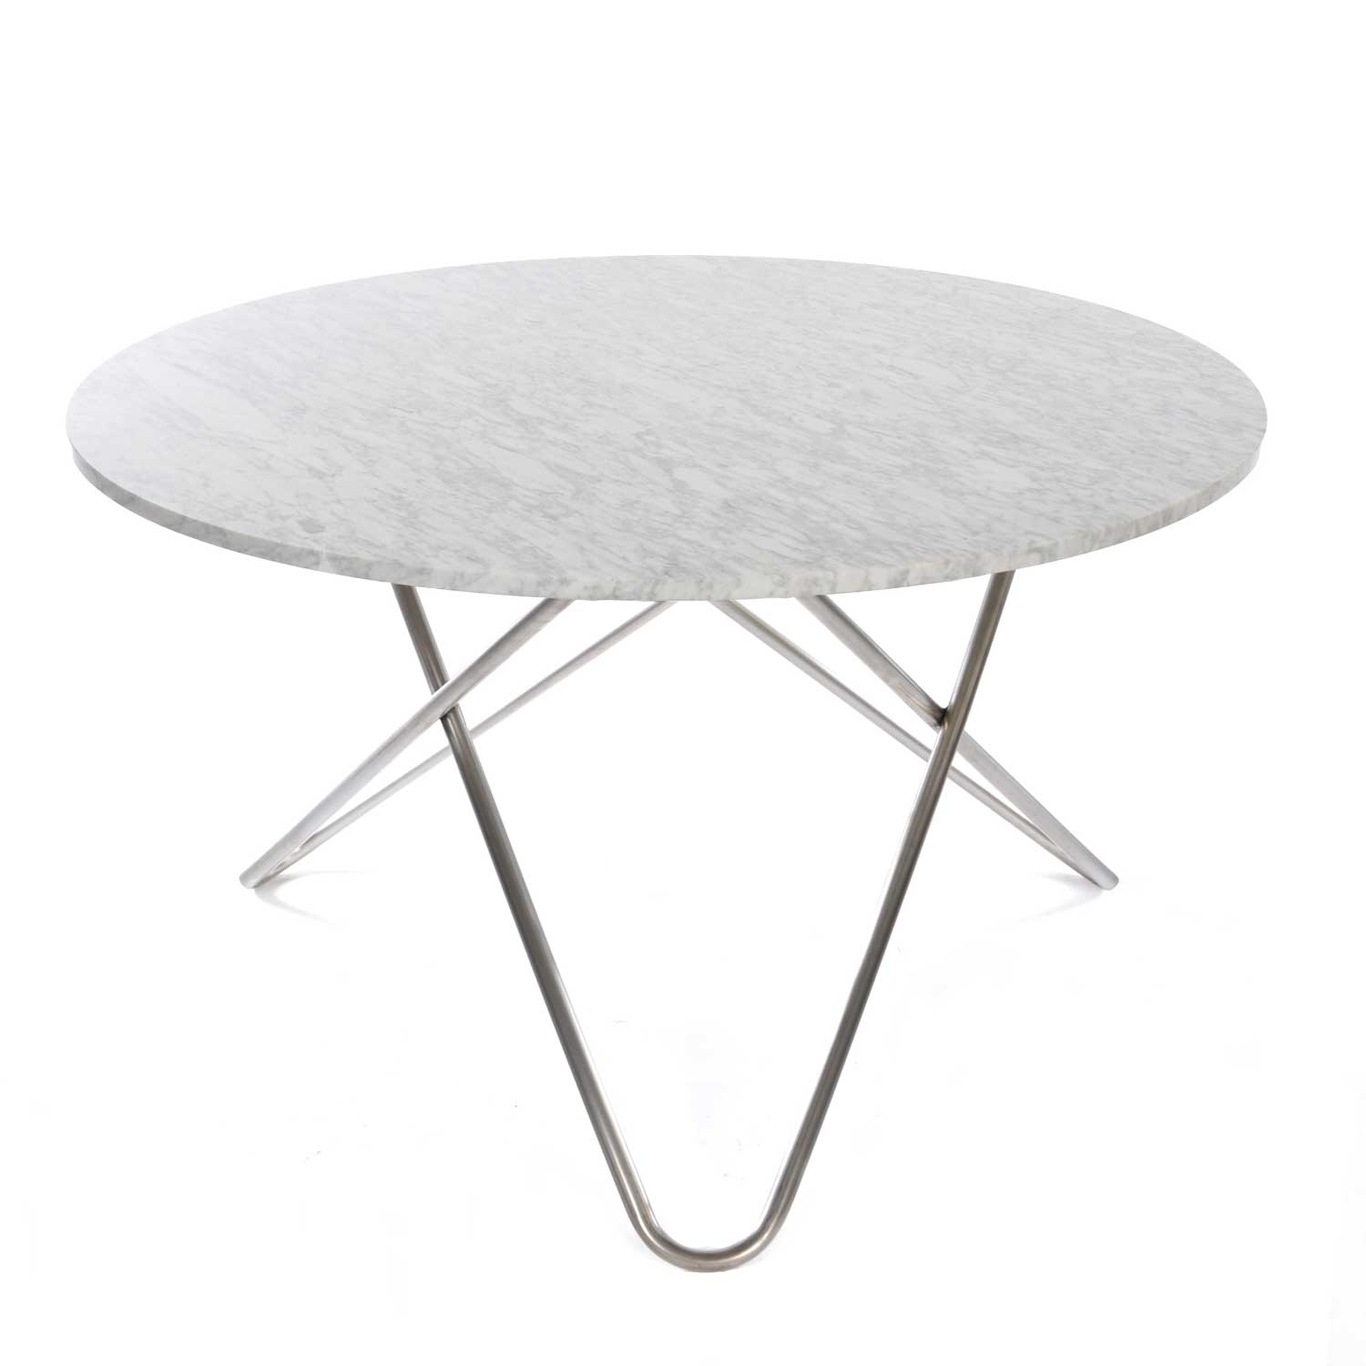 Big O Spisebord, Hvid Marmor/Stål